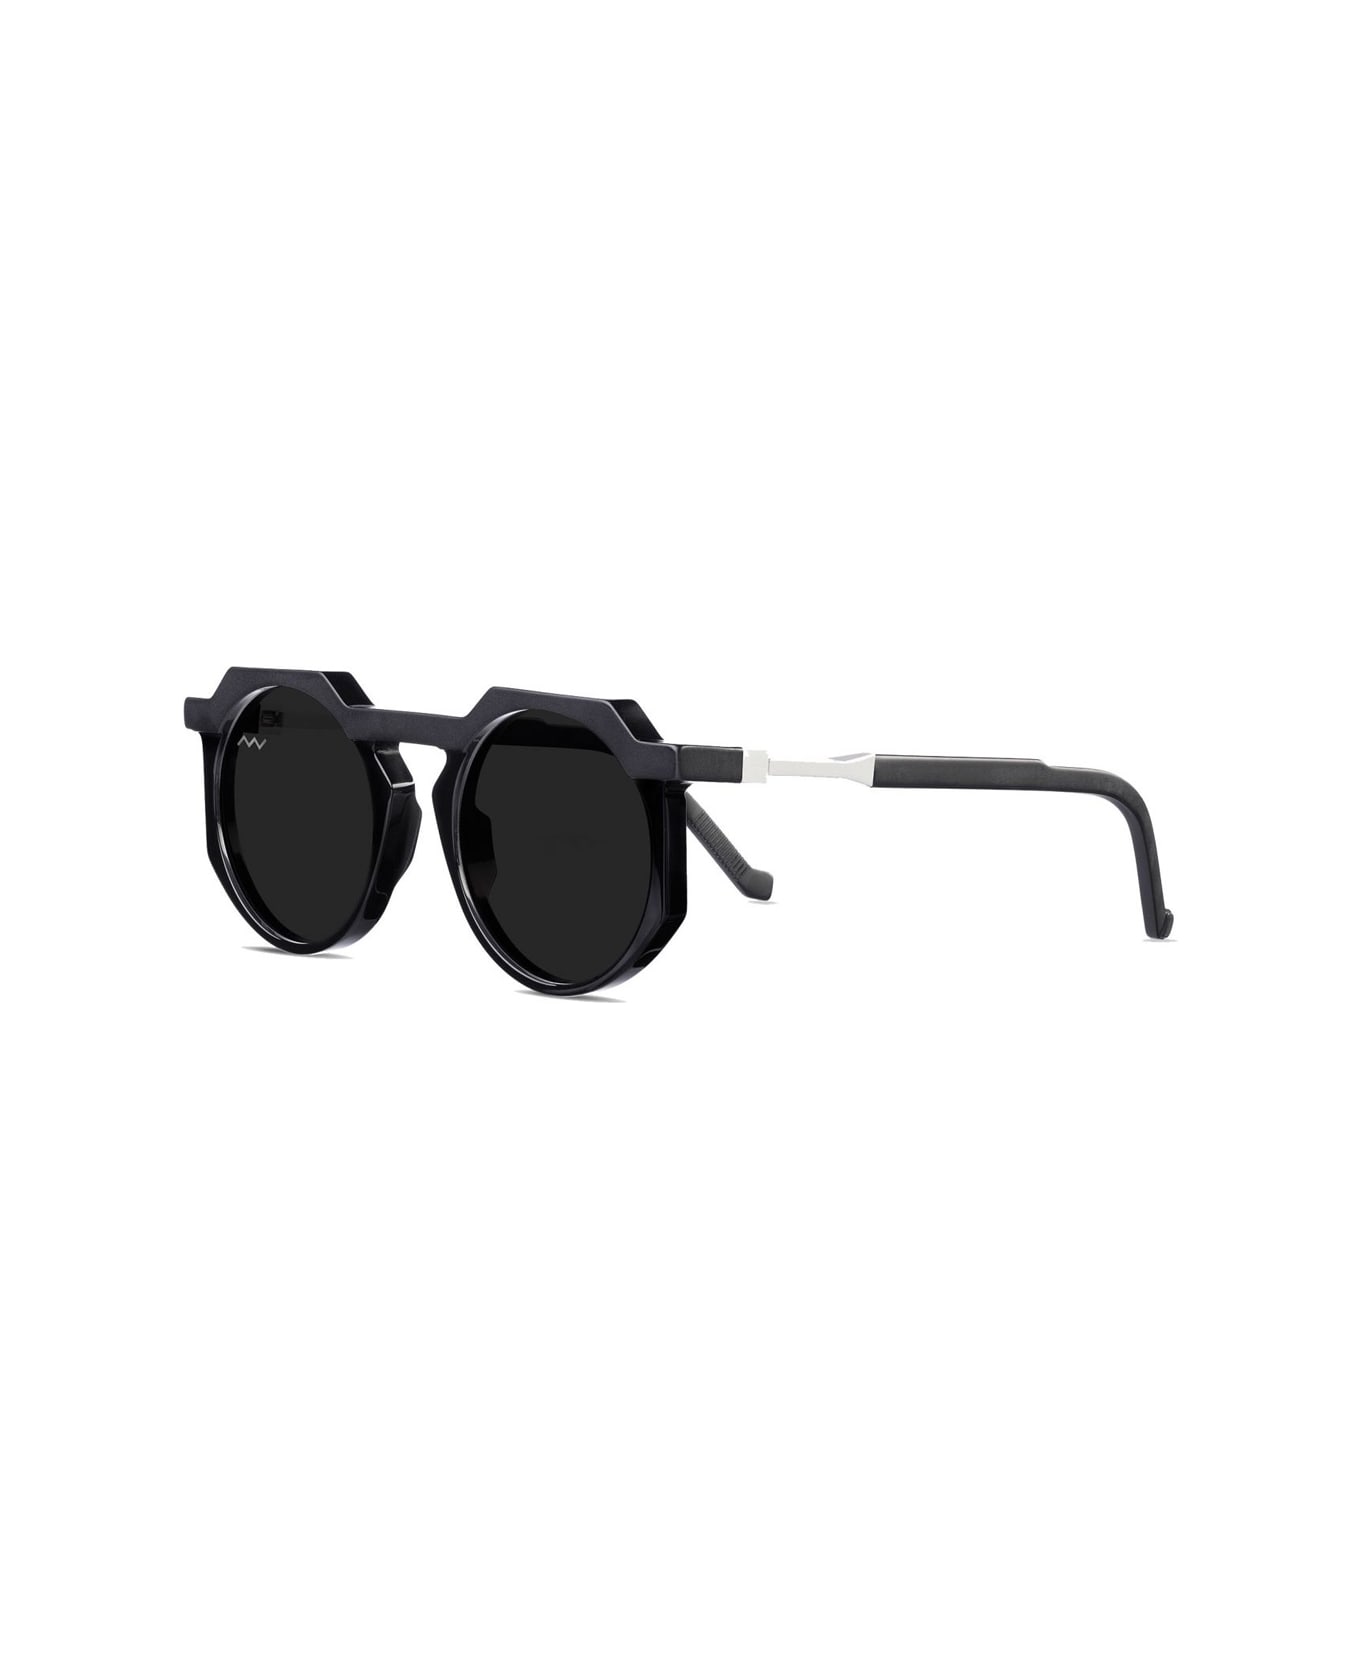 VAVA Wl0028 Black Sunglasses - Nero サングラス